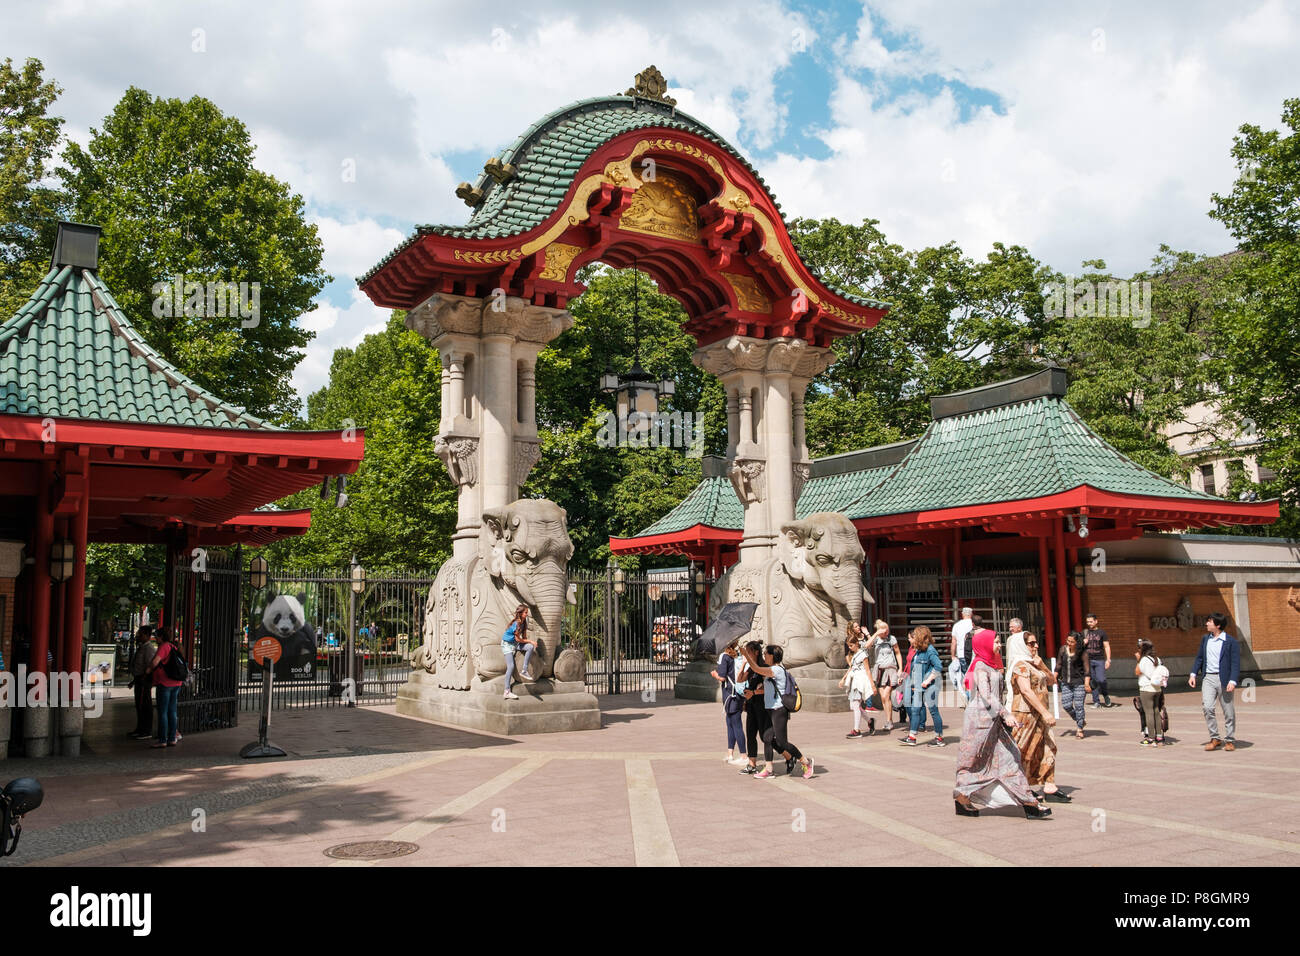 Berlin, Germany - july 2018: The Entrance Gate (Elephant Gate) of the Berlin Zoo / Zoological Garden in Berlin, Germany Stock Photo